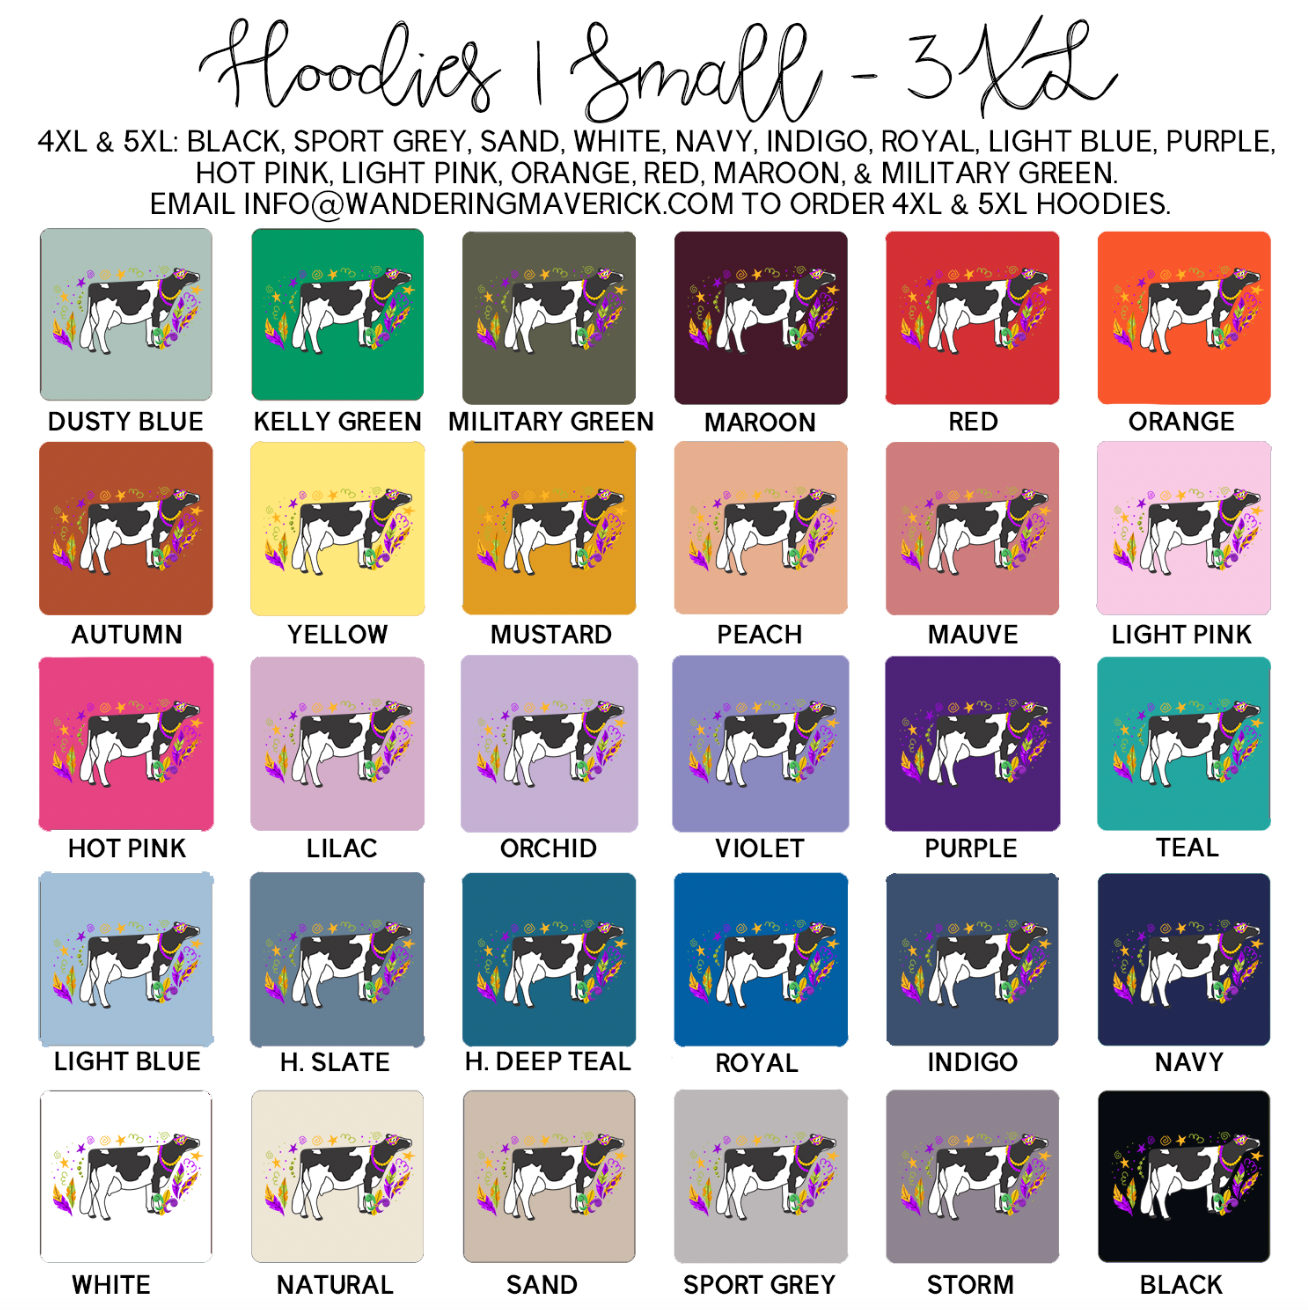 Dairy Cow Mardi Gras Hoodie (S-3XL) Unisex - Multiple Colors!